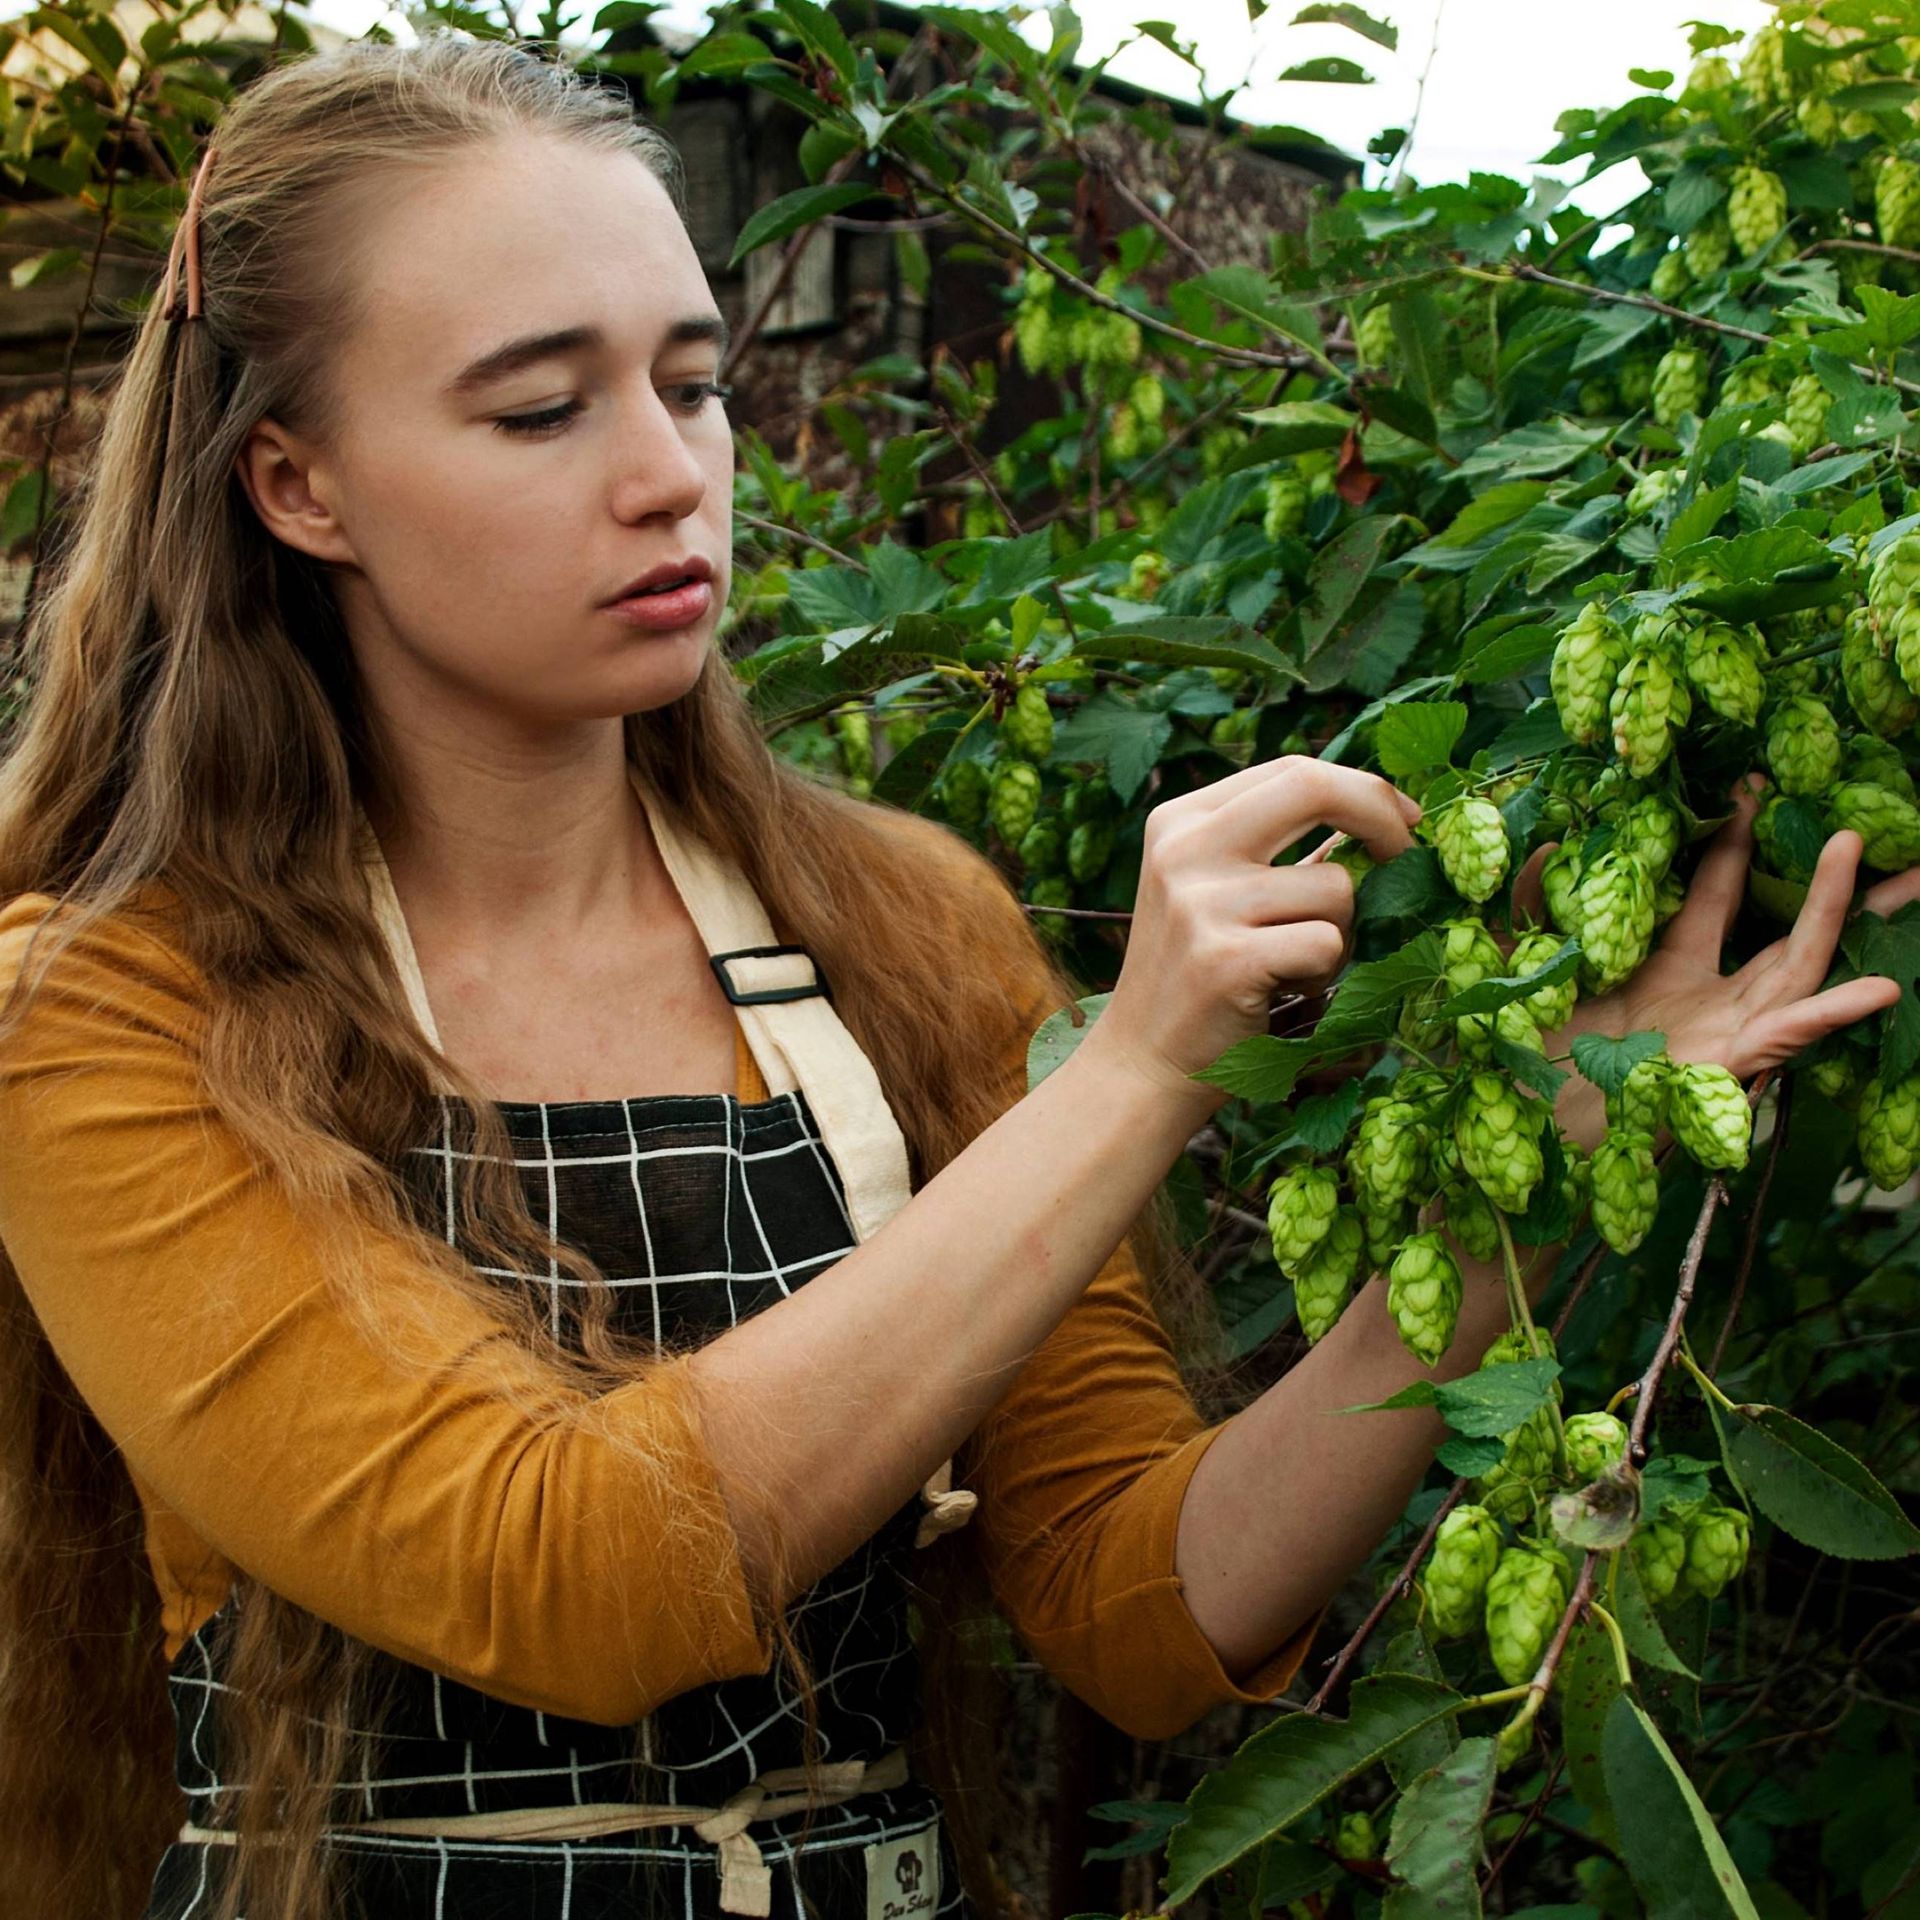 Image of a farm worker harvesting hops